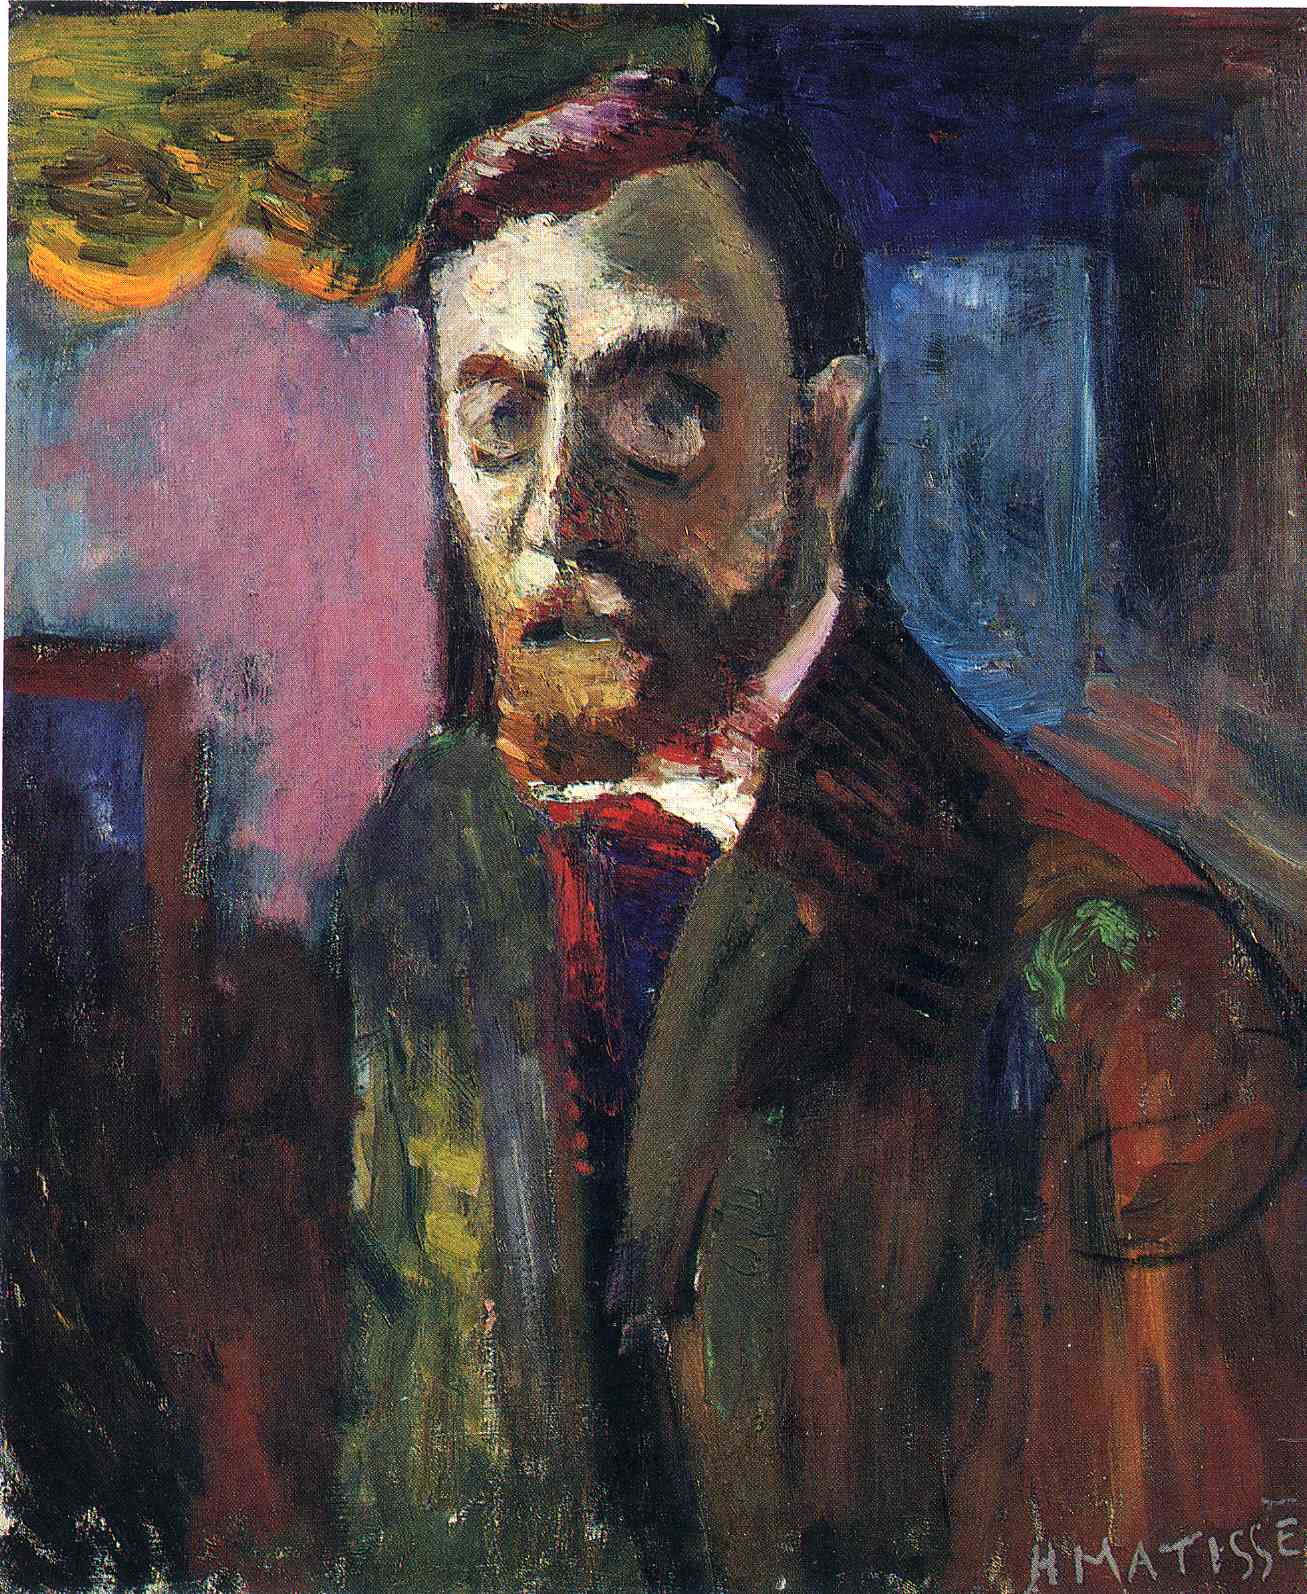 Self-Portrait, 1900 - Henri Matisse - WikiArt.org